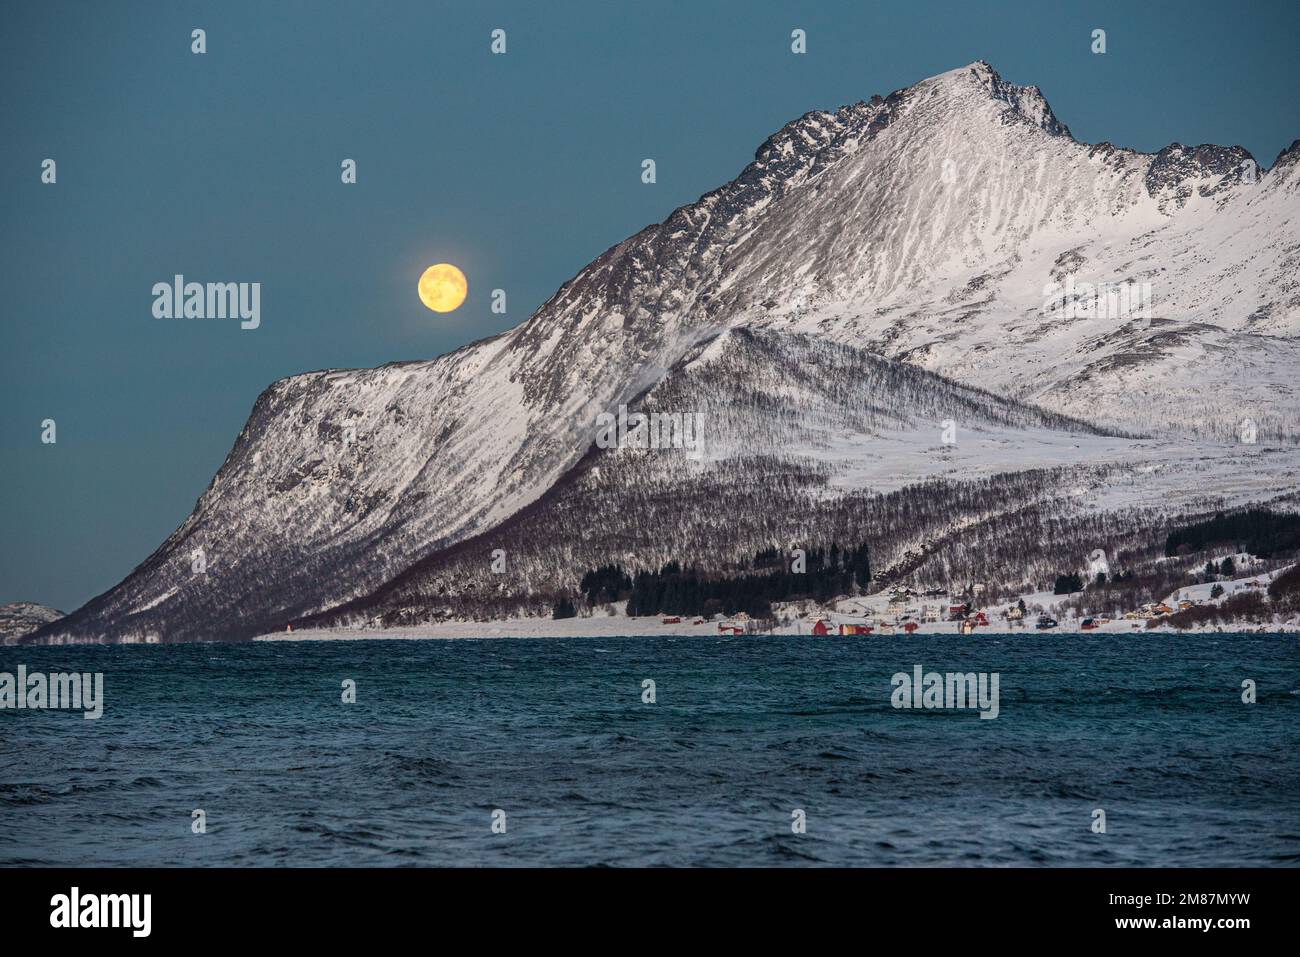 Polar night and full moon in Arctic landscape near Tromso, Norway Stock Photo